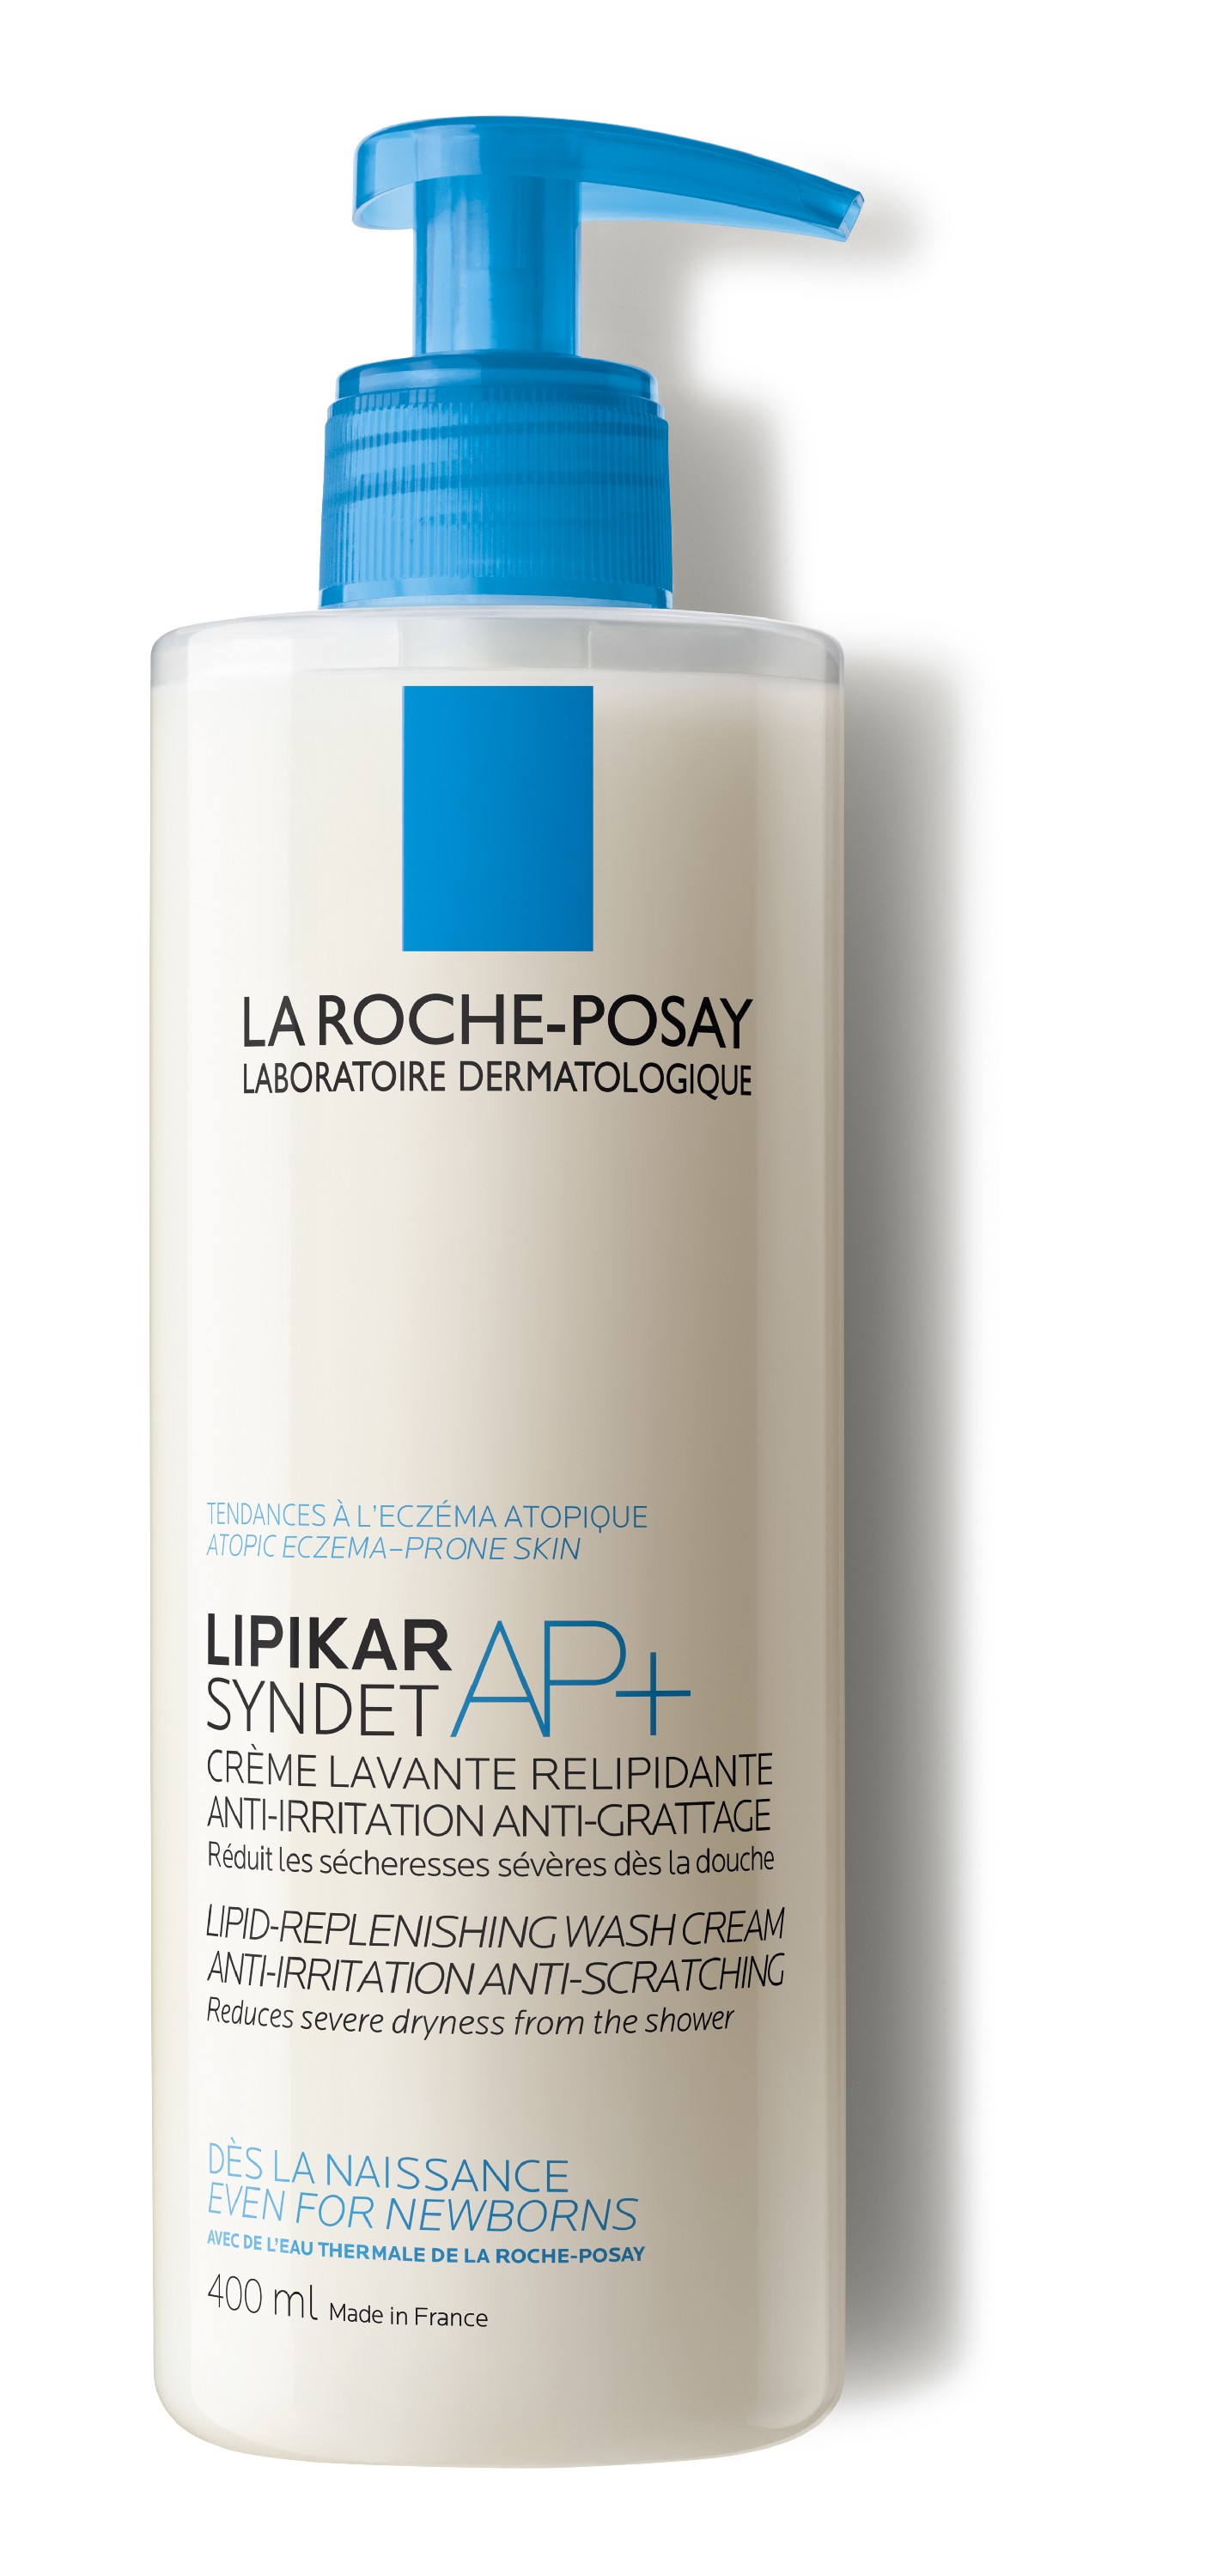 La Roche-Posay Lipikar Syndet AP+, 400ml